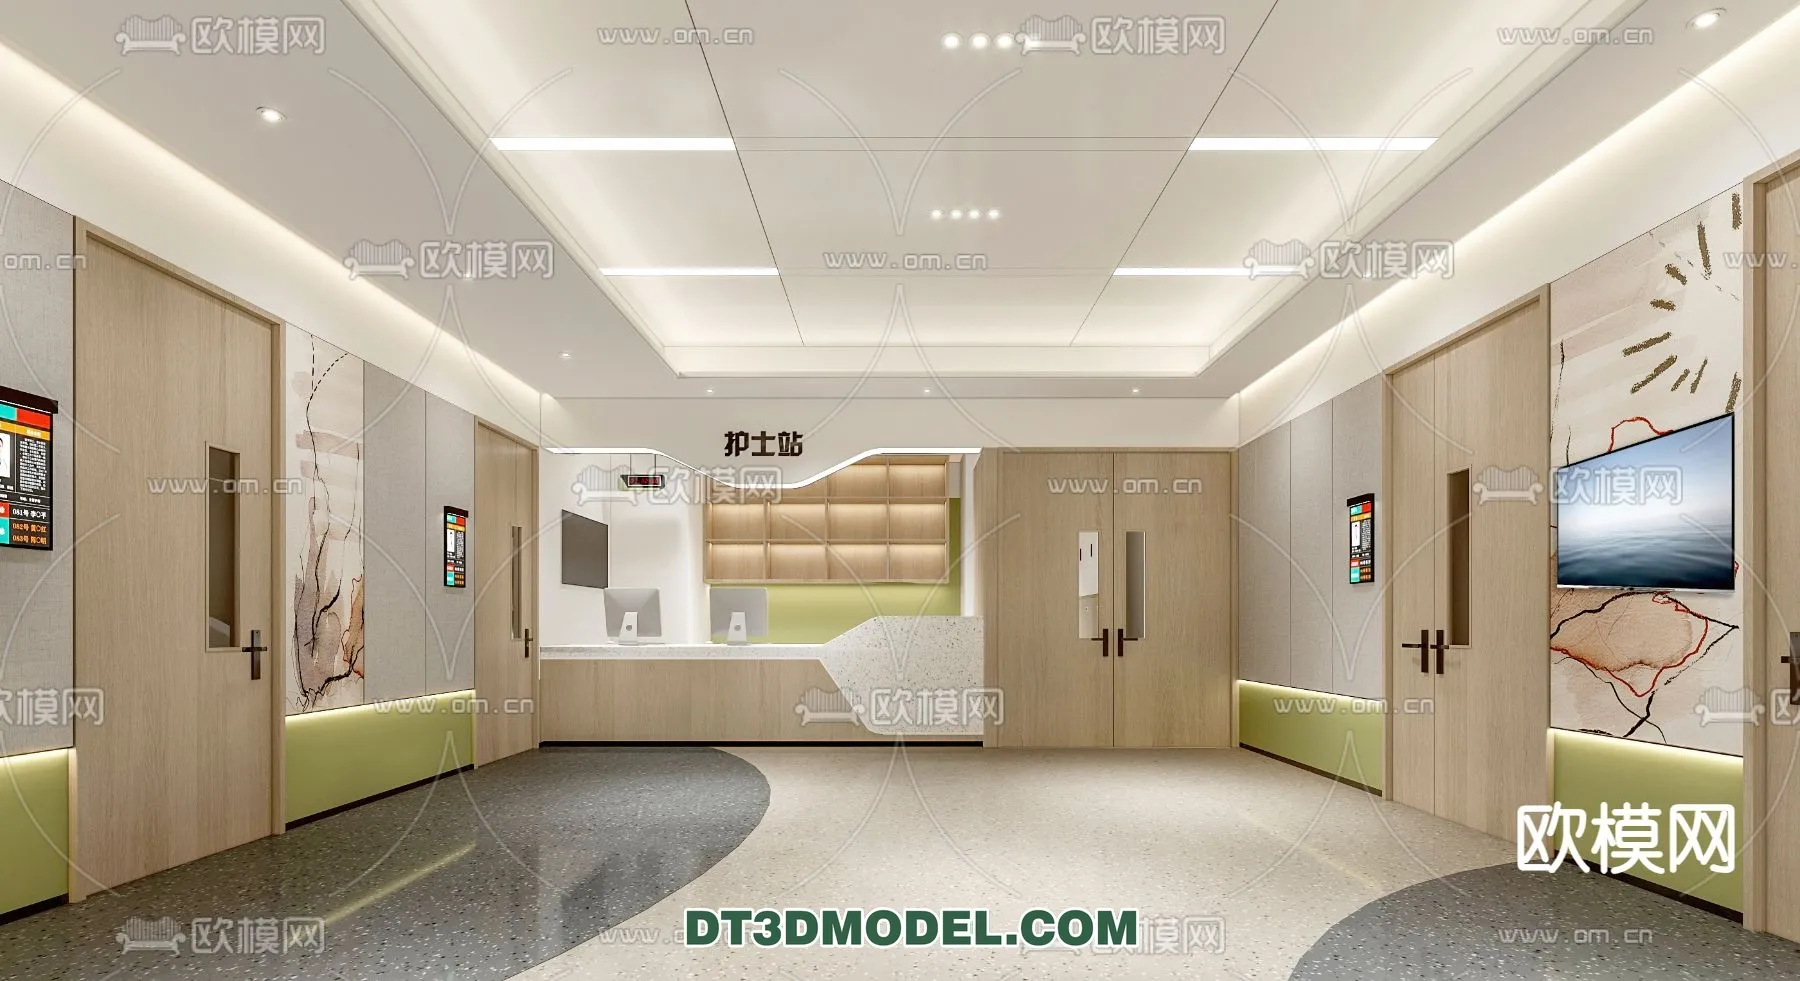 HOSPITAL 3D SCENES – MODERN – 0172